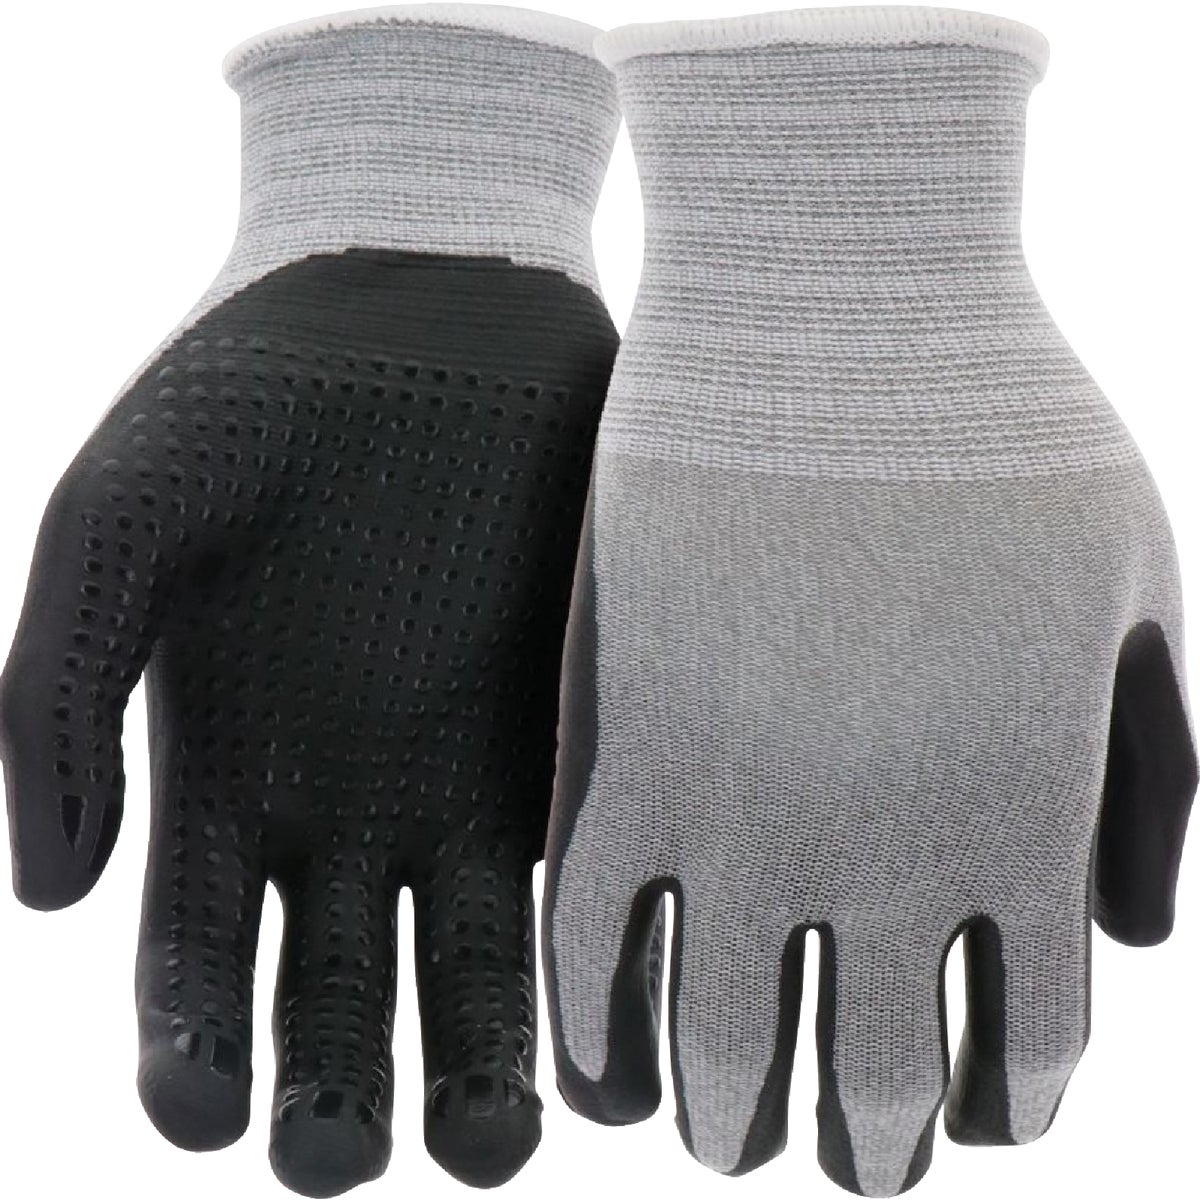 Do it Best Men's Medium Nitrile Coated Glove